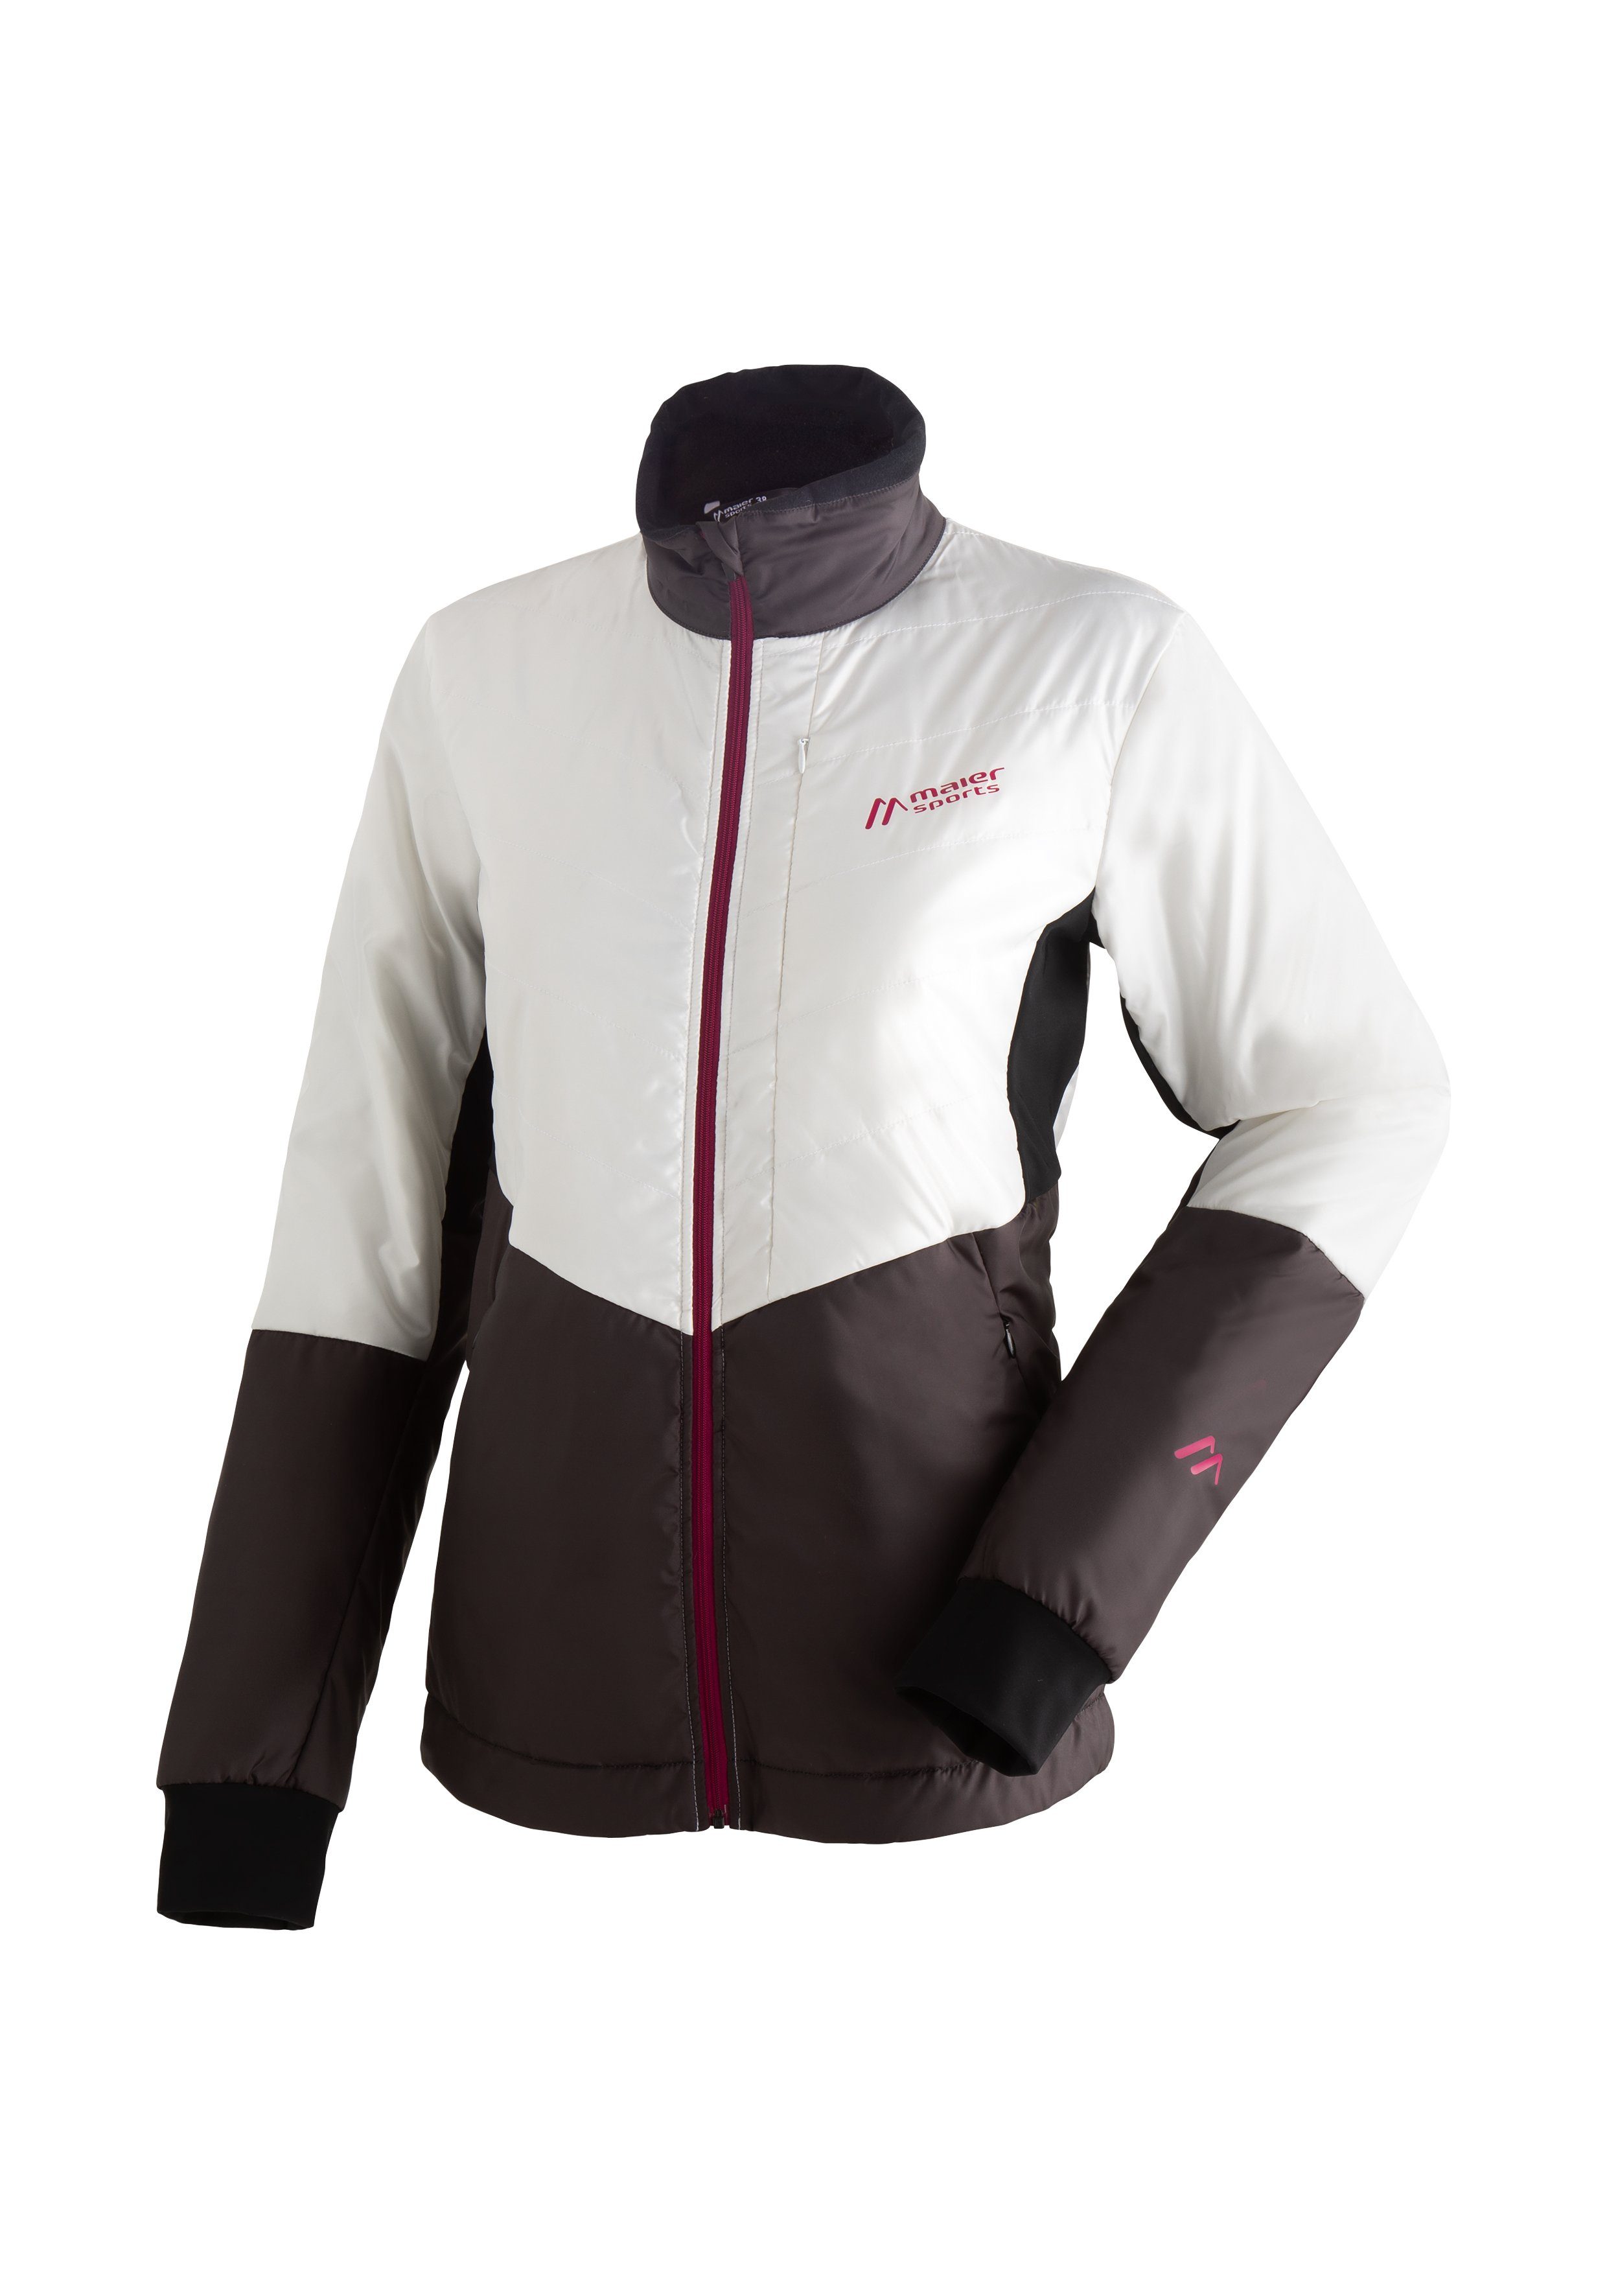 Maier Sports Skijacke Skjoma Wool 3 Langlaufjacke, mit Taschen Outdoorjacke wattierte W weiß geräumige Damen